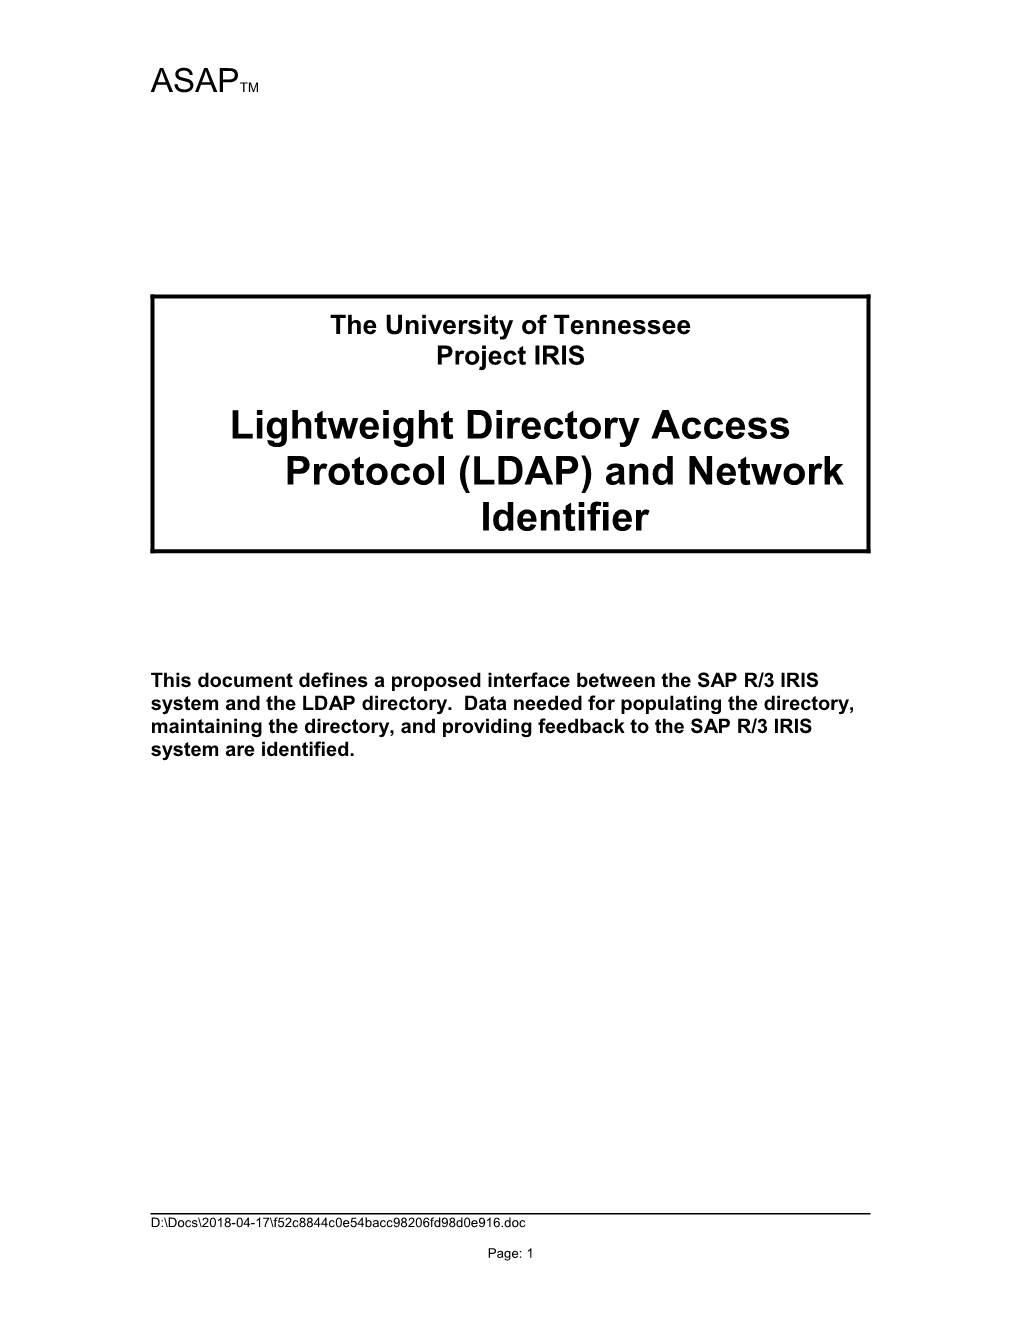 Lightweight Directory Access Protocol (LDAP) and Network Identifier